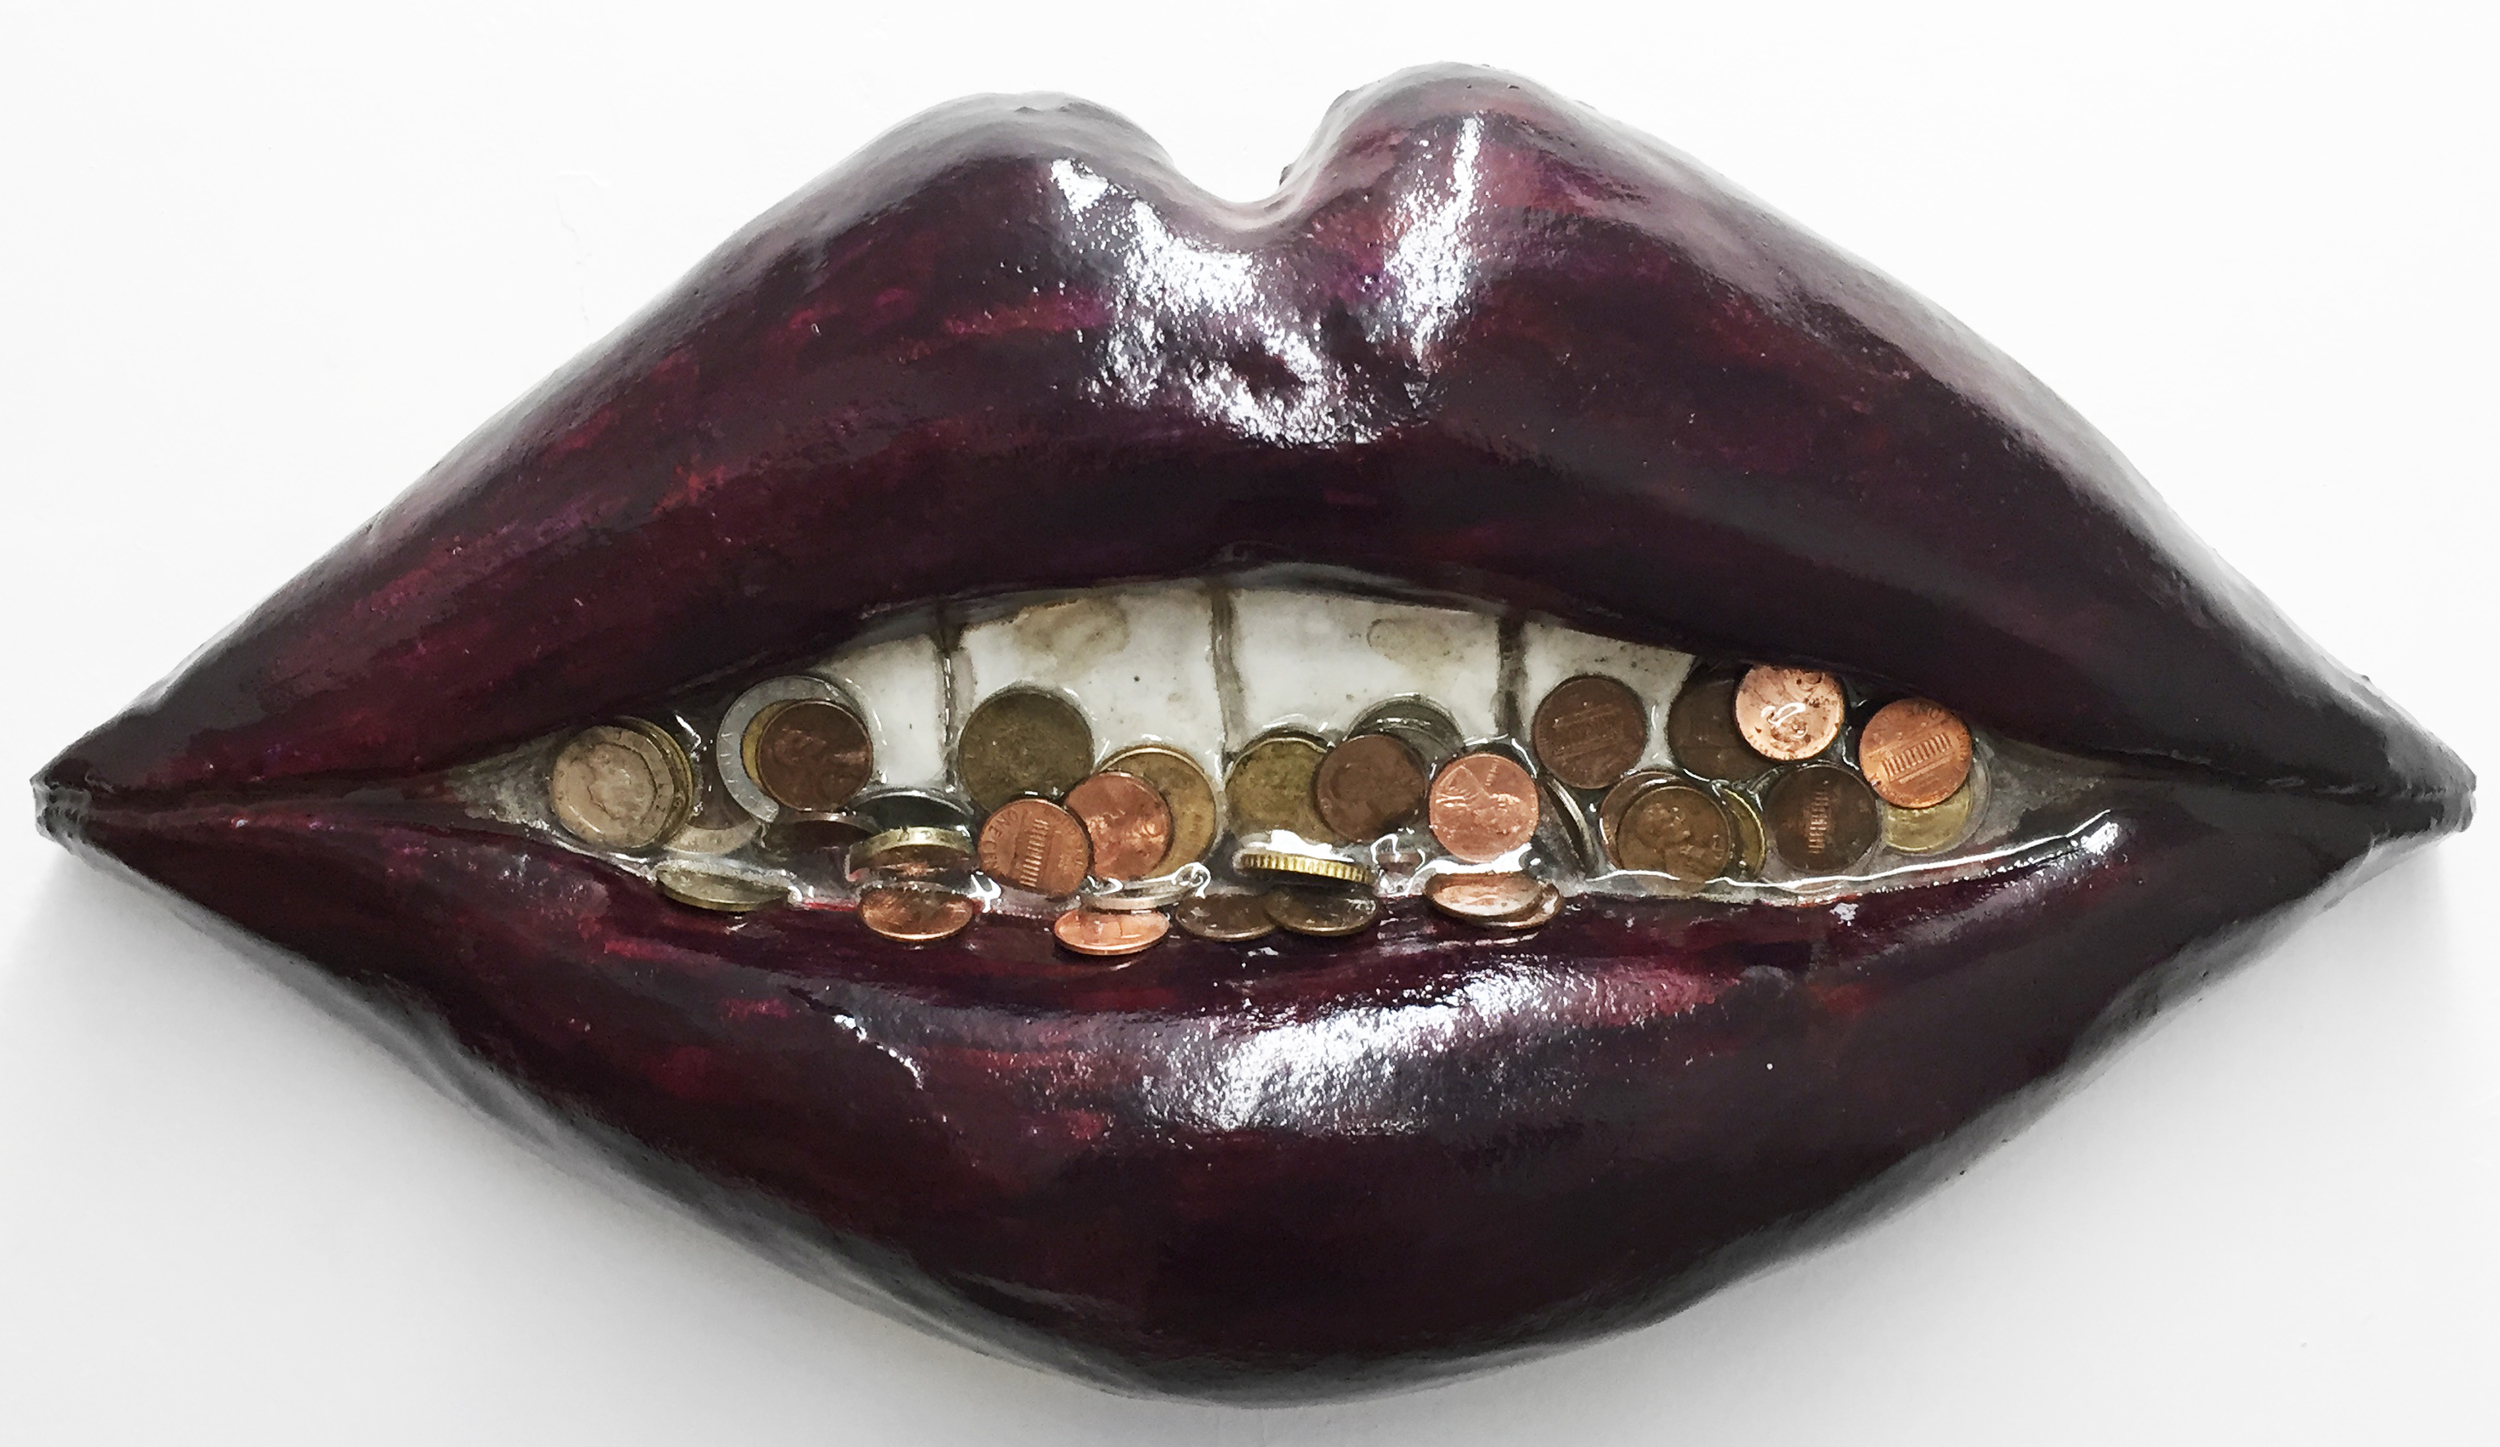  Liz Craft,&nbsp; Big Mouth II , 2013,&nbsp;ceramic, coins, epoxy,&nbsp;8.5 x 17.5 x 4.5 in    